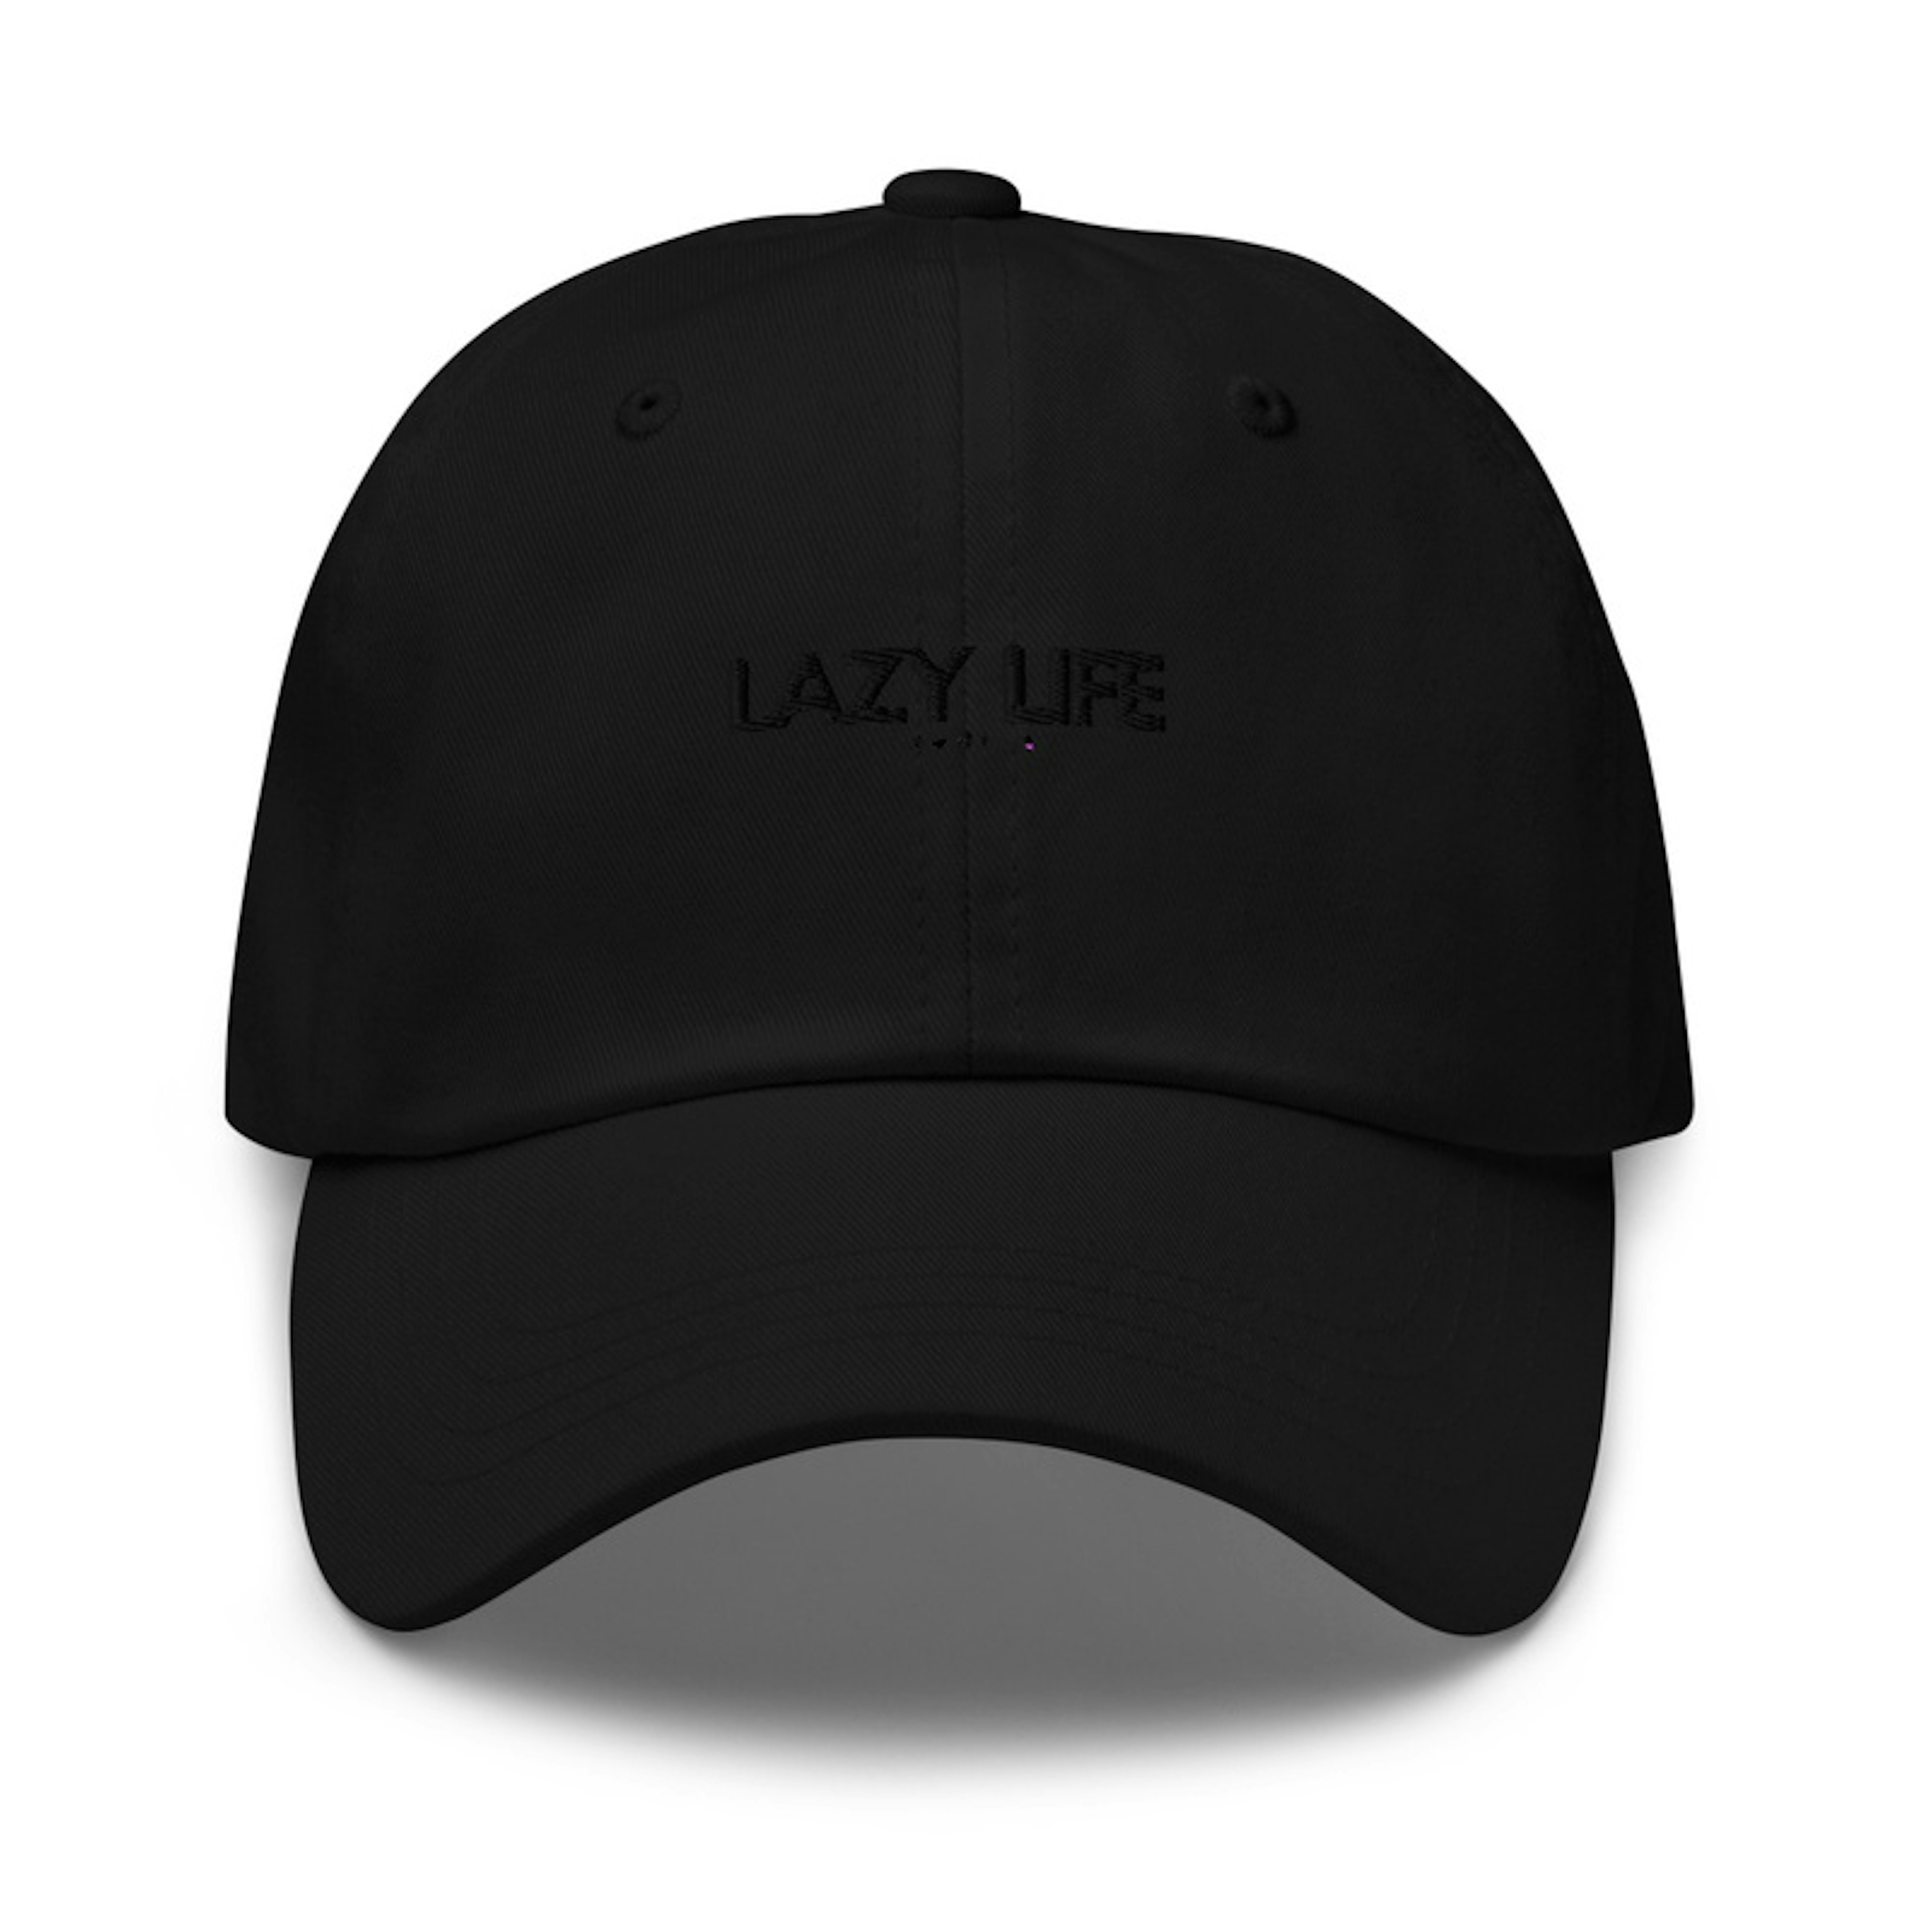 Lazy life hat